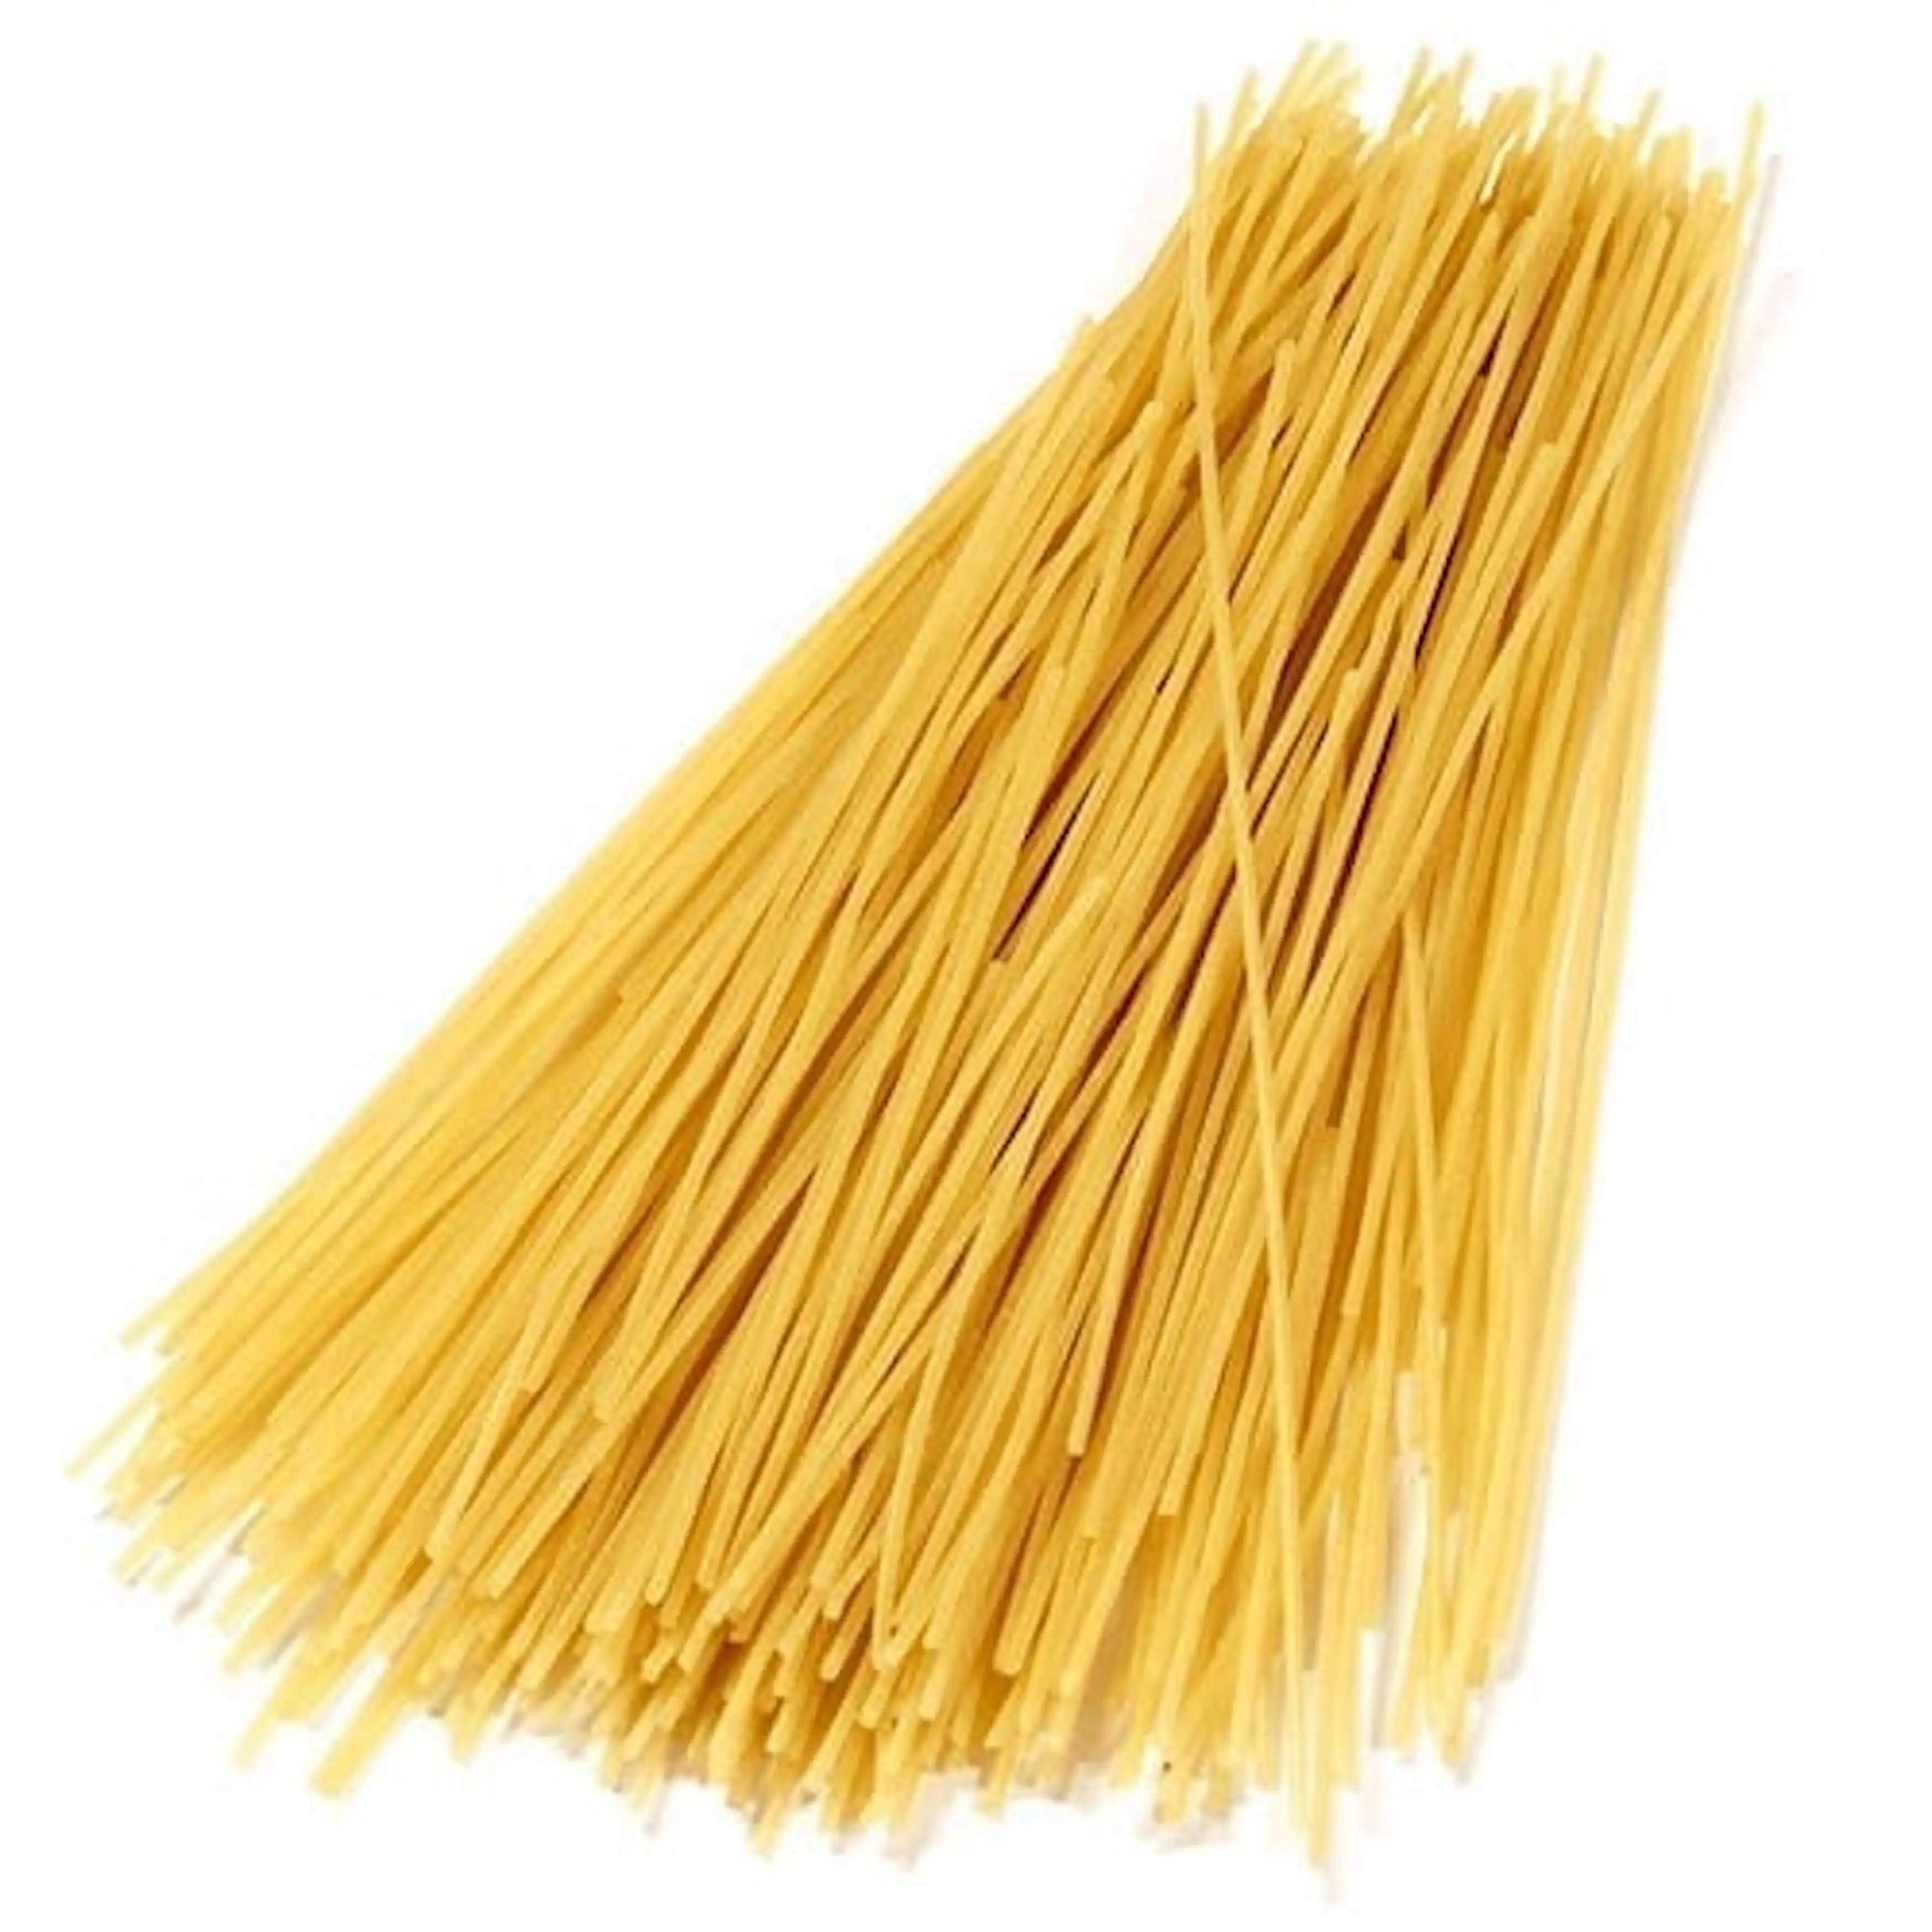 Лапша из твердой пшеницы. Spaghetti 5kg. Макароны длинные. Макароны плоские длинные. Макароны рассыпаны.